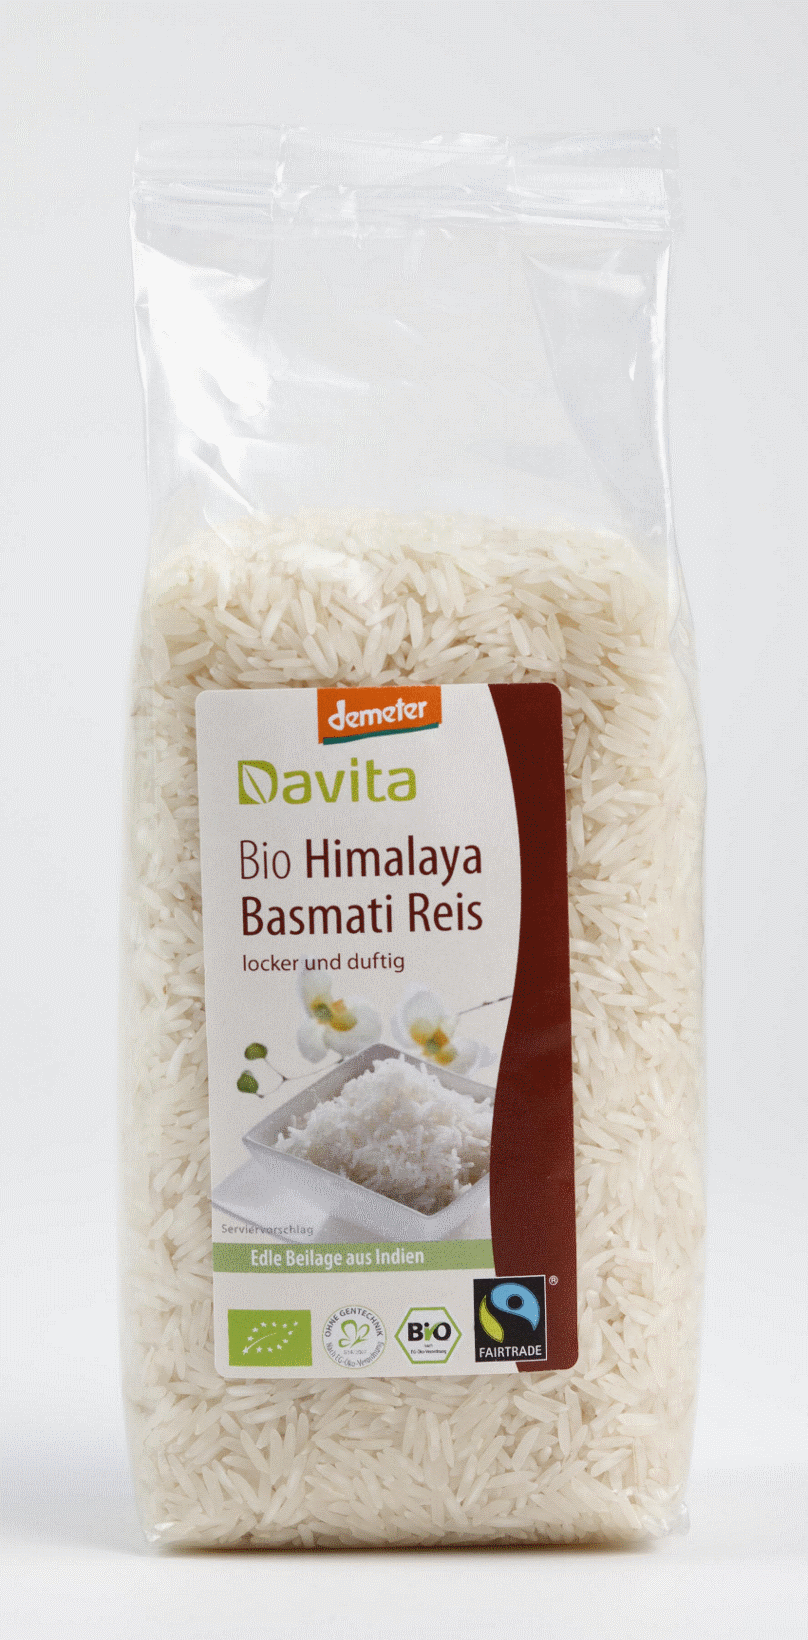 Bio Himalaya Basmati Reis